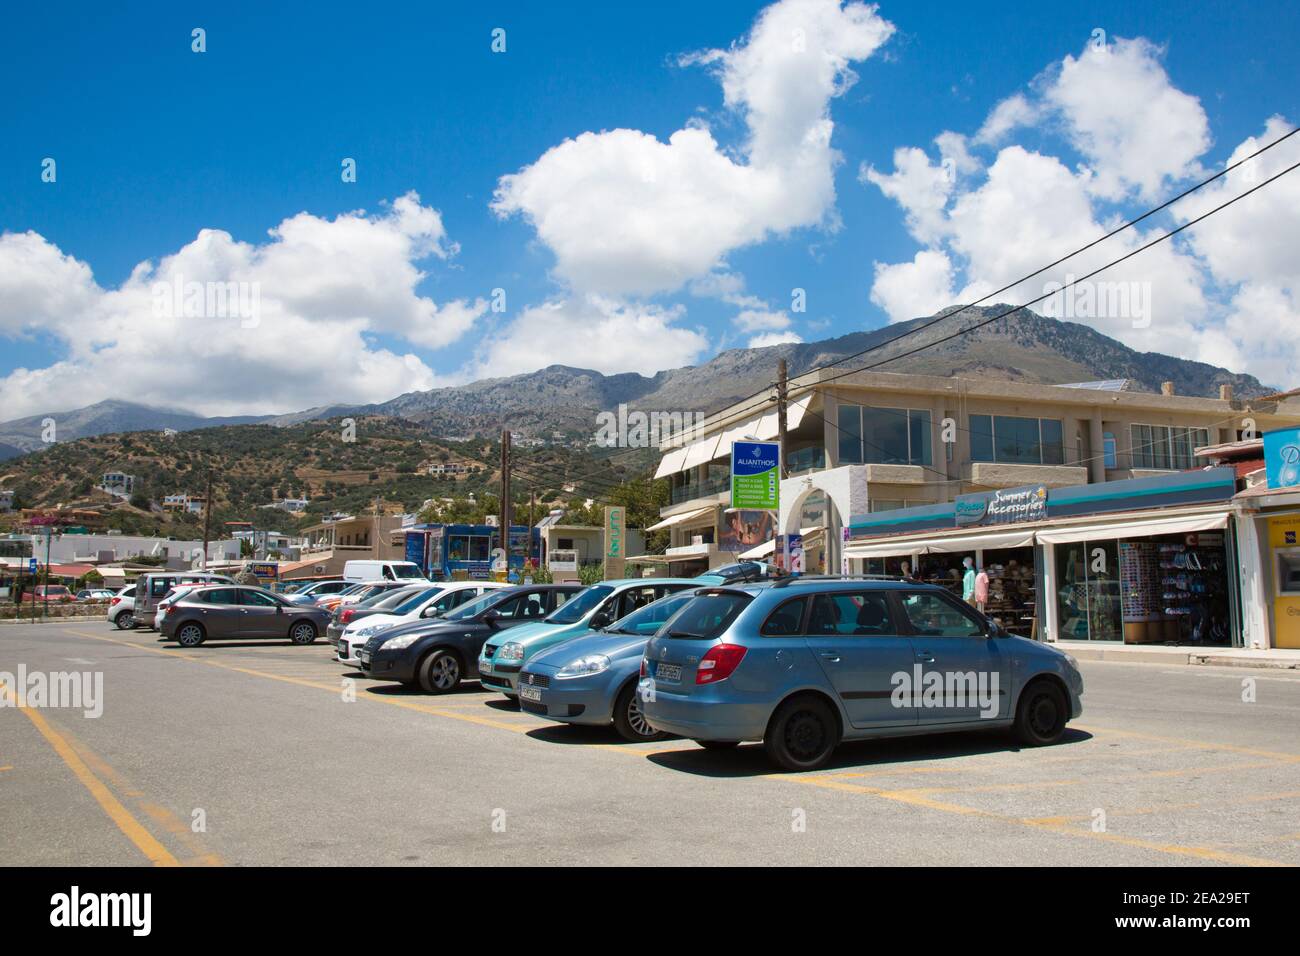 CRETE, GREECE : Main street in the Plakias village on the south coast of the Greek island of Crete. Stock Photo